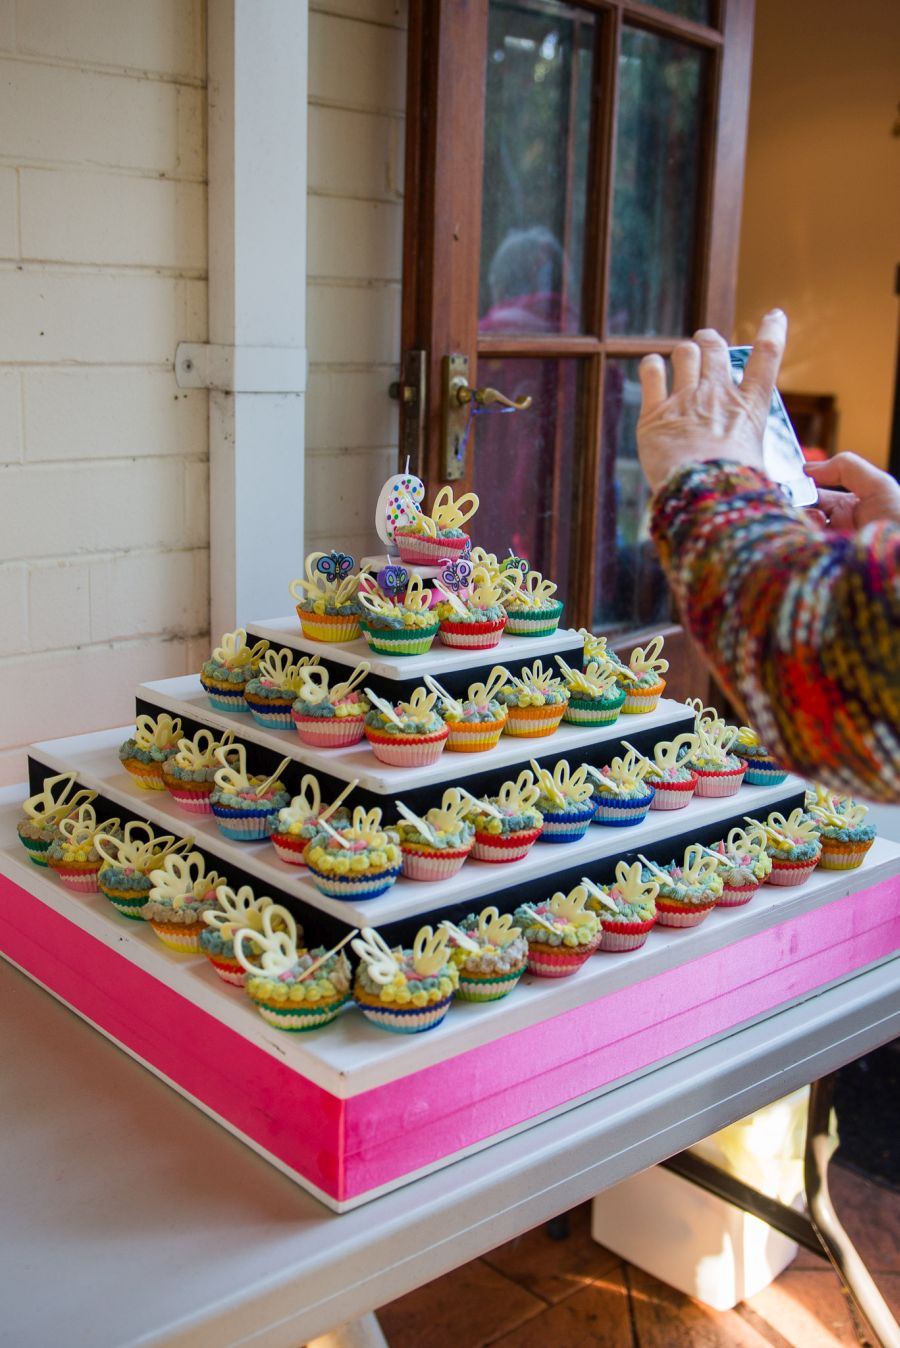 The rainbow butterfly birthday cupcakes